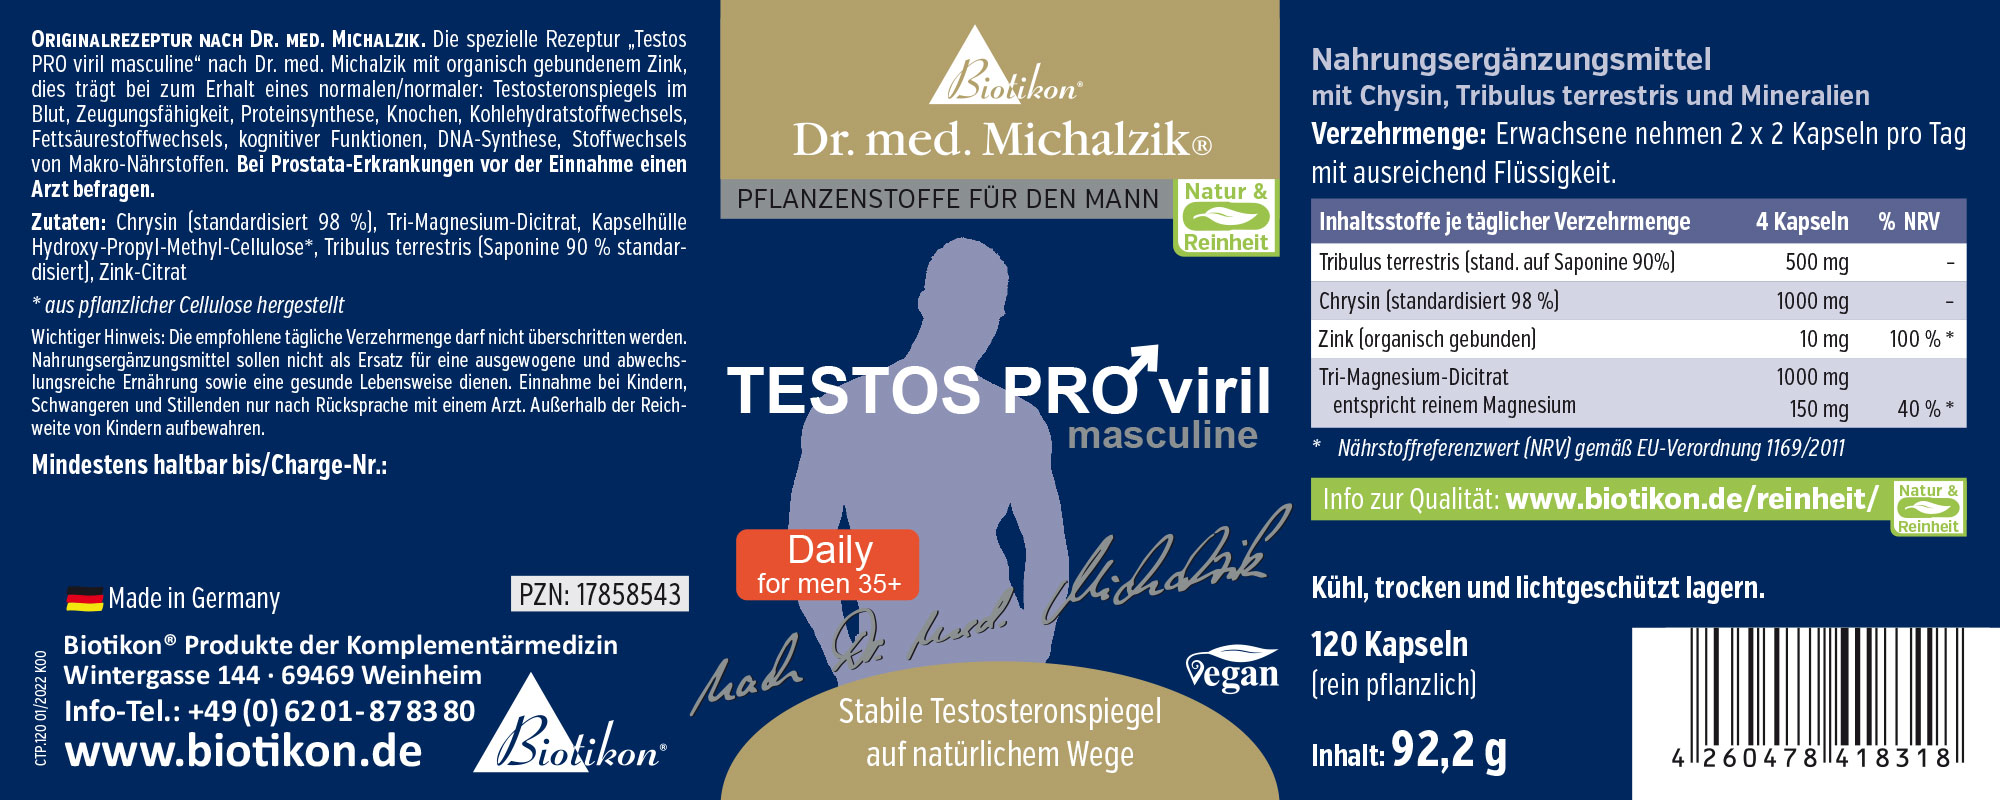 Testos PRO viril masculine du Docteur Alexander Michalzik